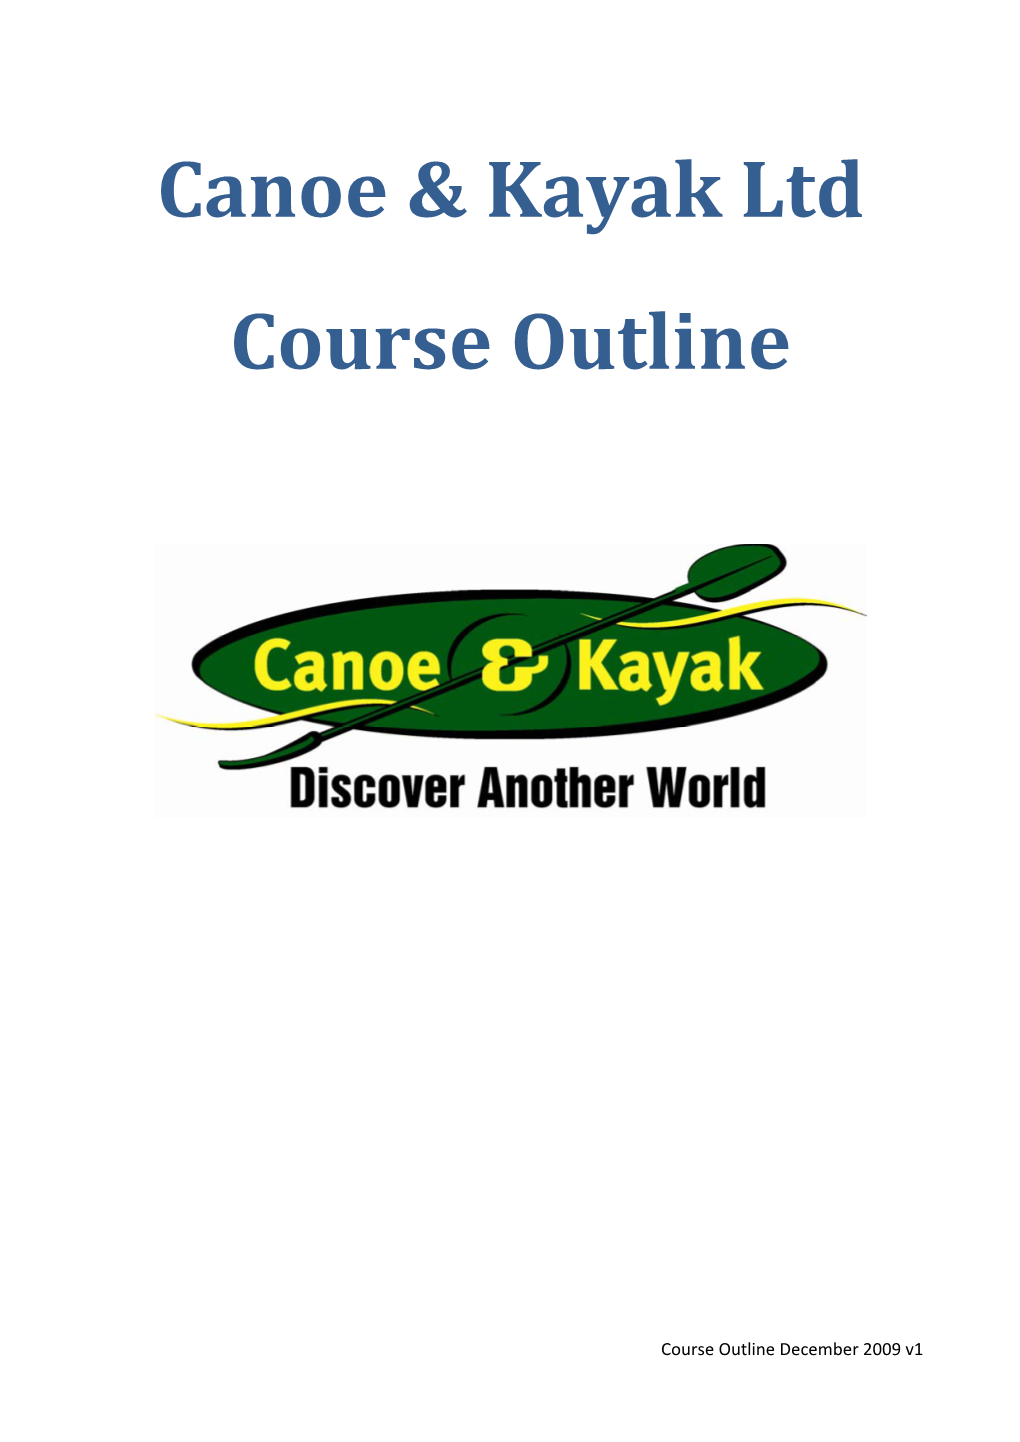 Canoe & Kayak Ltd Course Outline